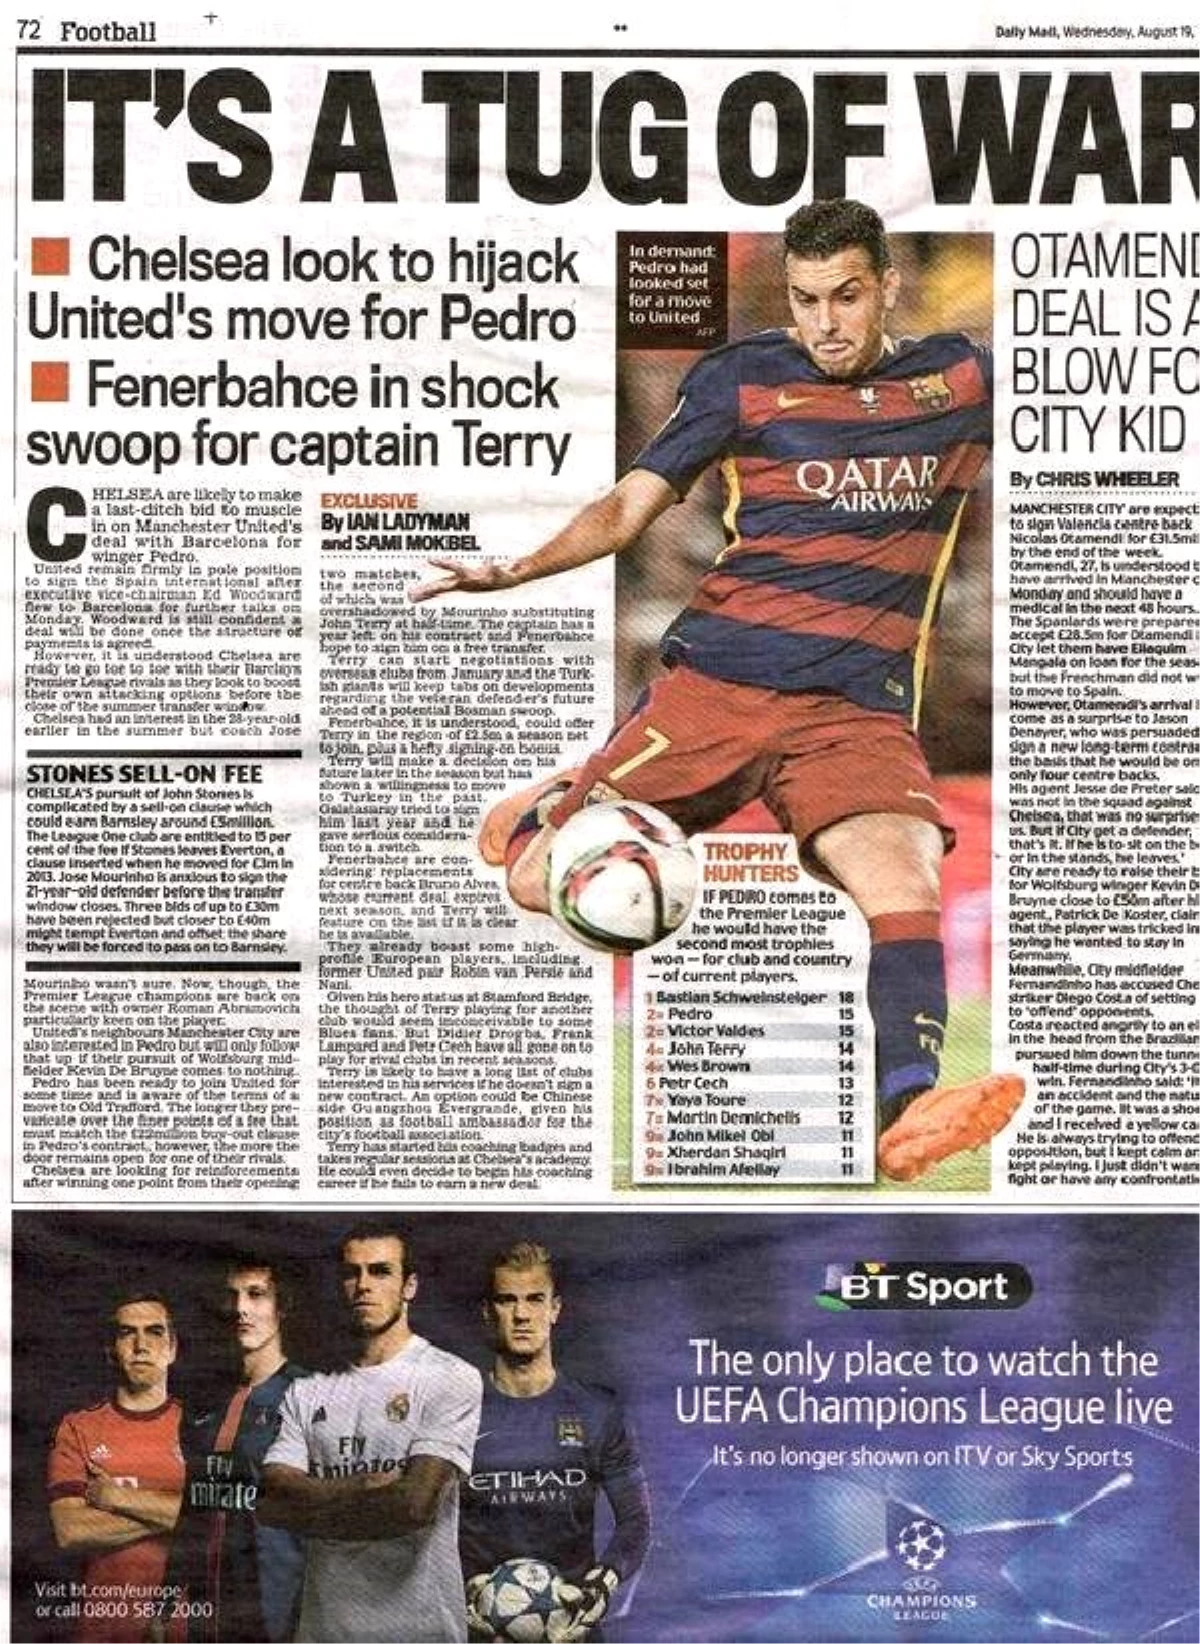 Daily Mail: "Fenerbahçe\'nin Chelsea\'nin Kaptanı Terry\'e Şok Atağı"